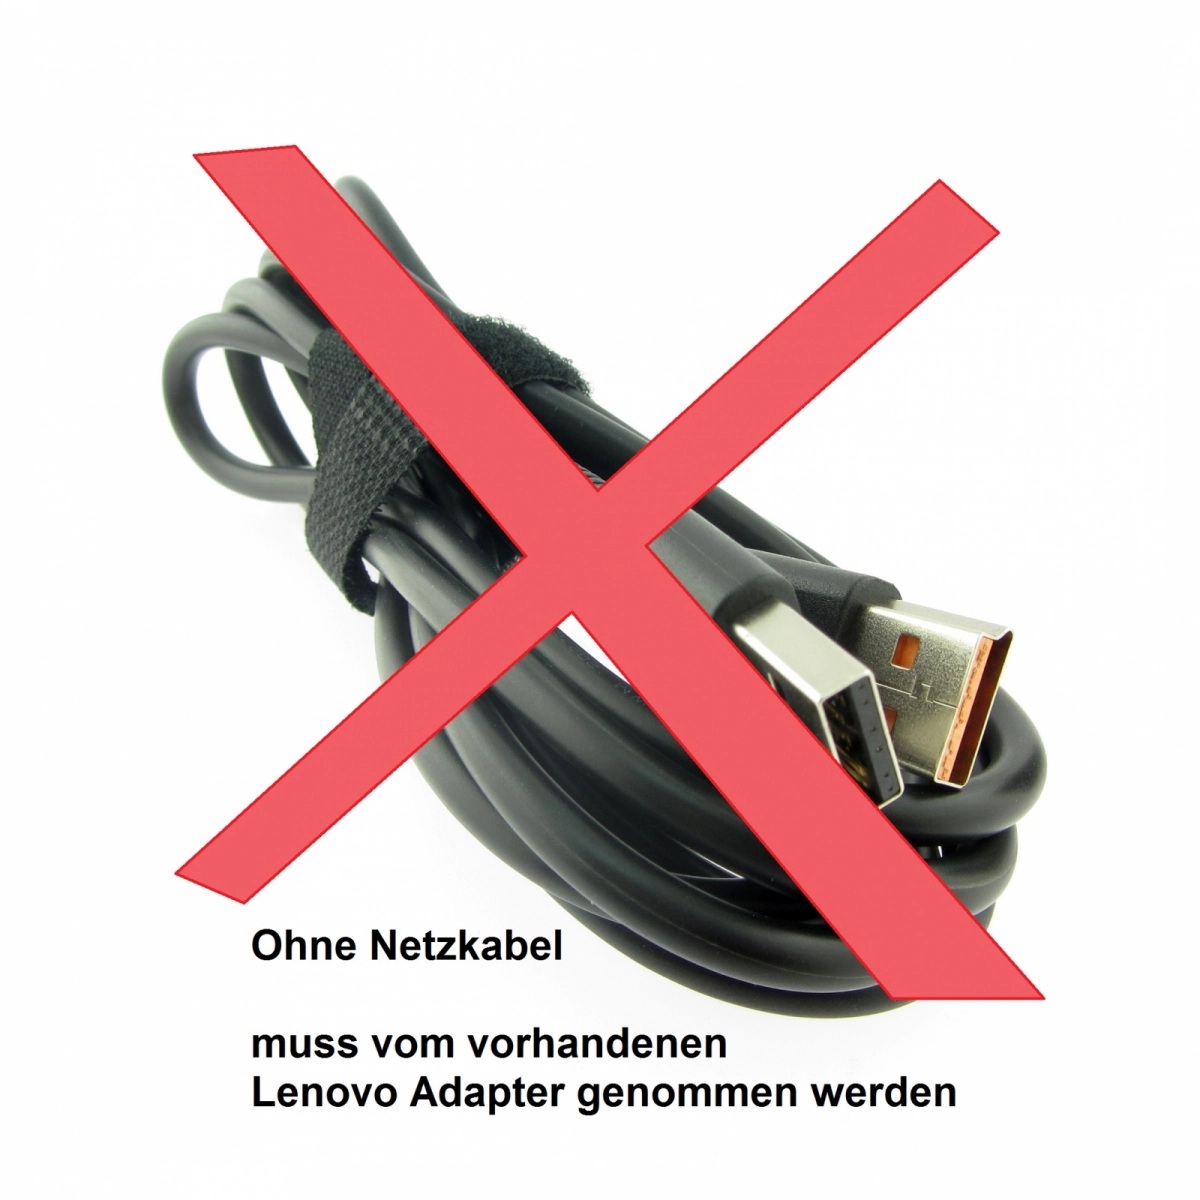 Original Netzteil für LENOVO ADL40WDE 36200566, 20V, 2A, Stecker USB, ohne USB-Kabel